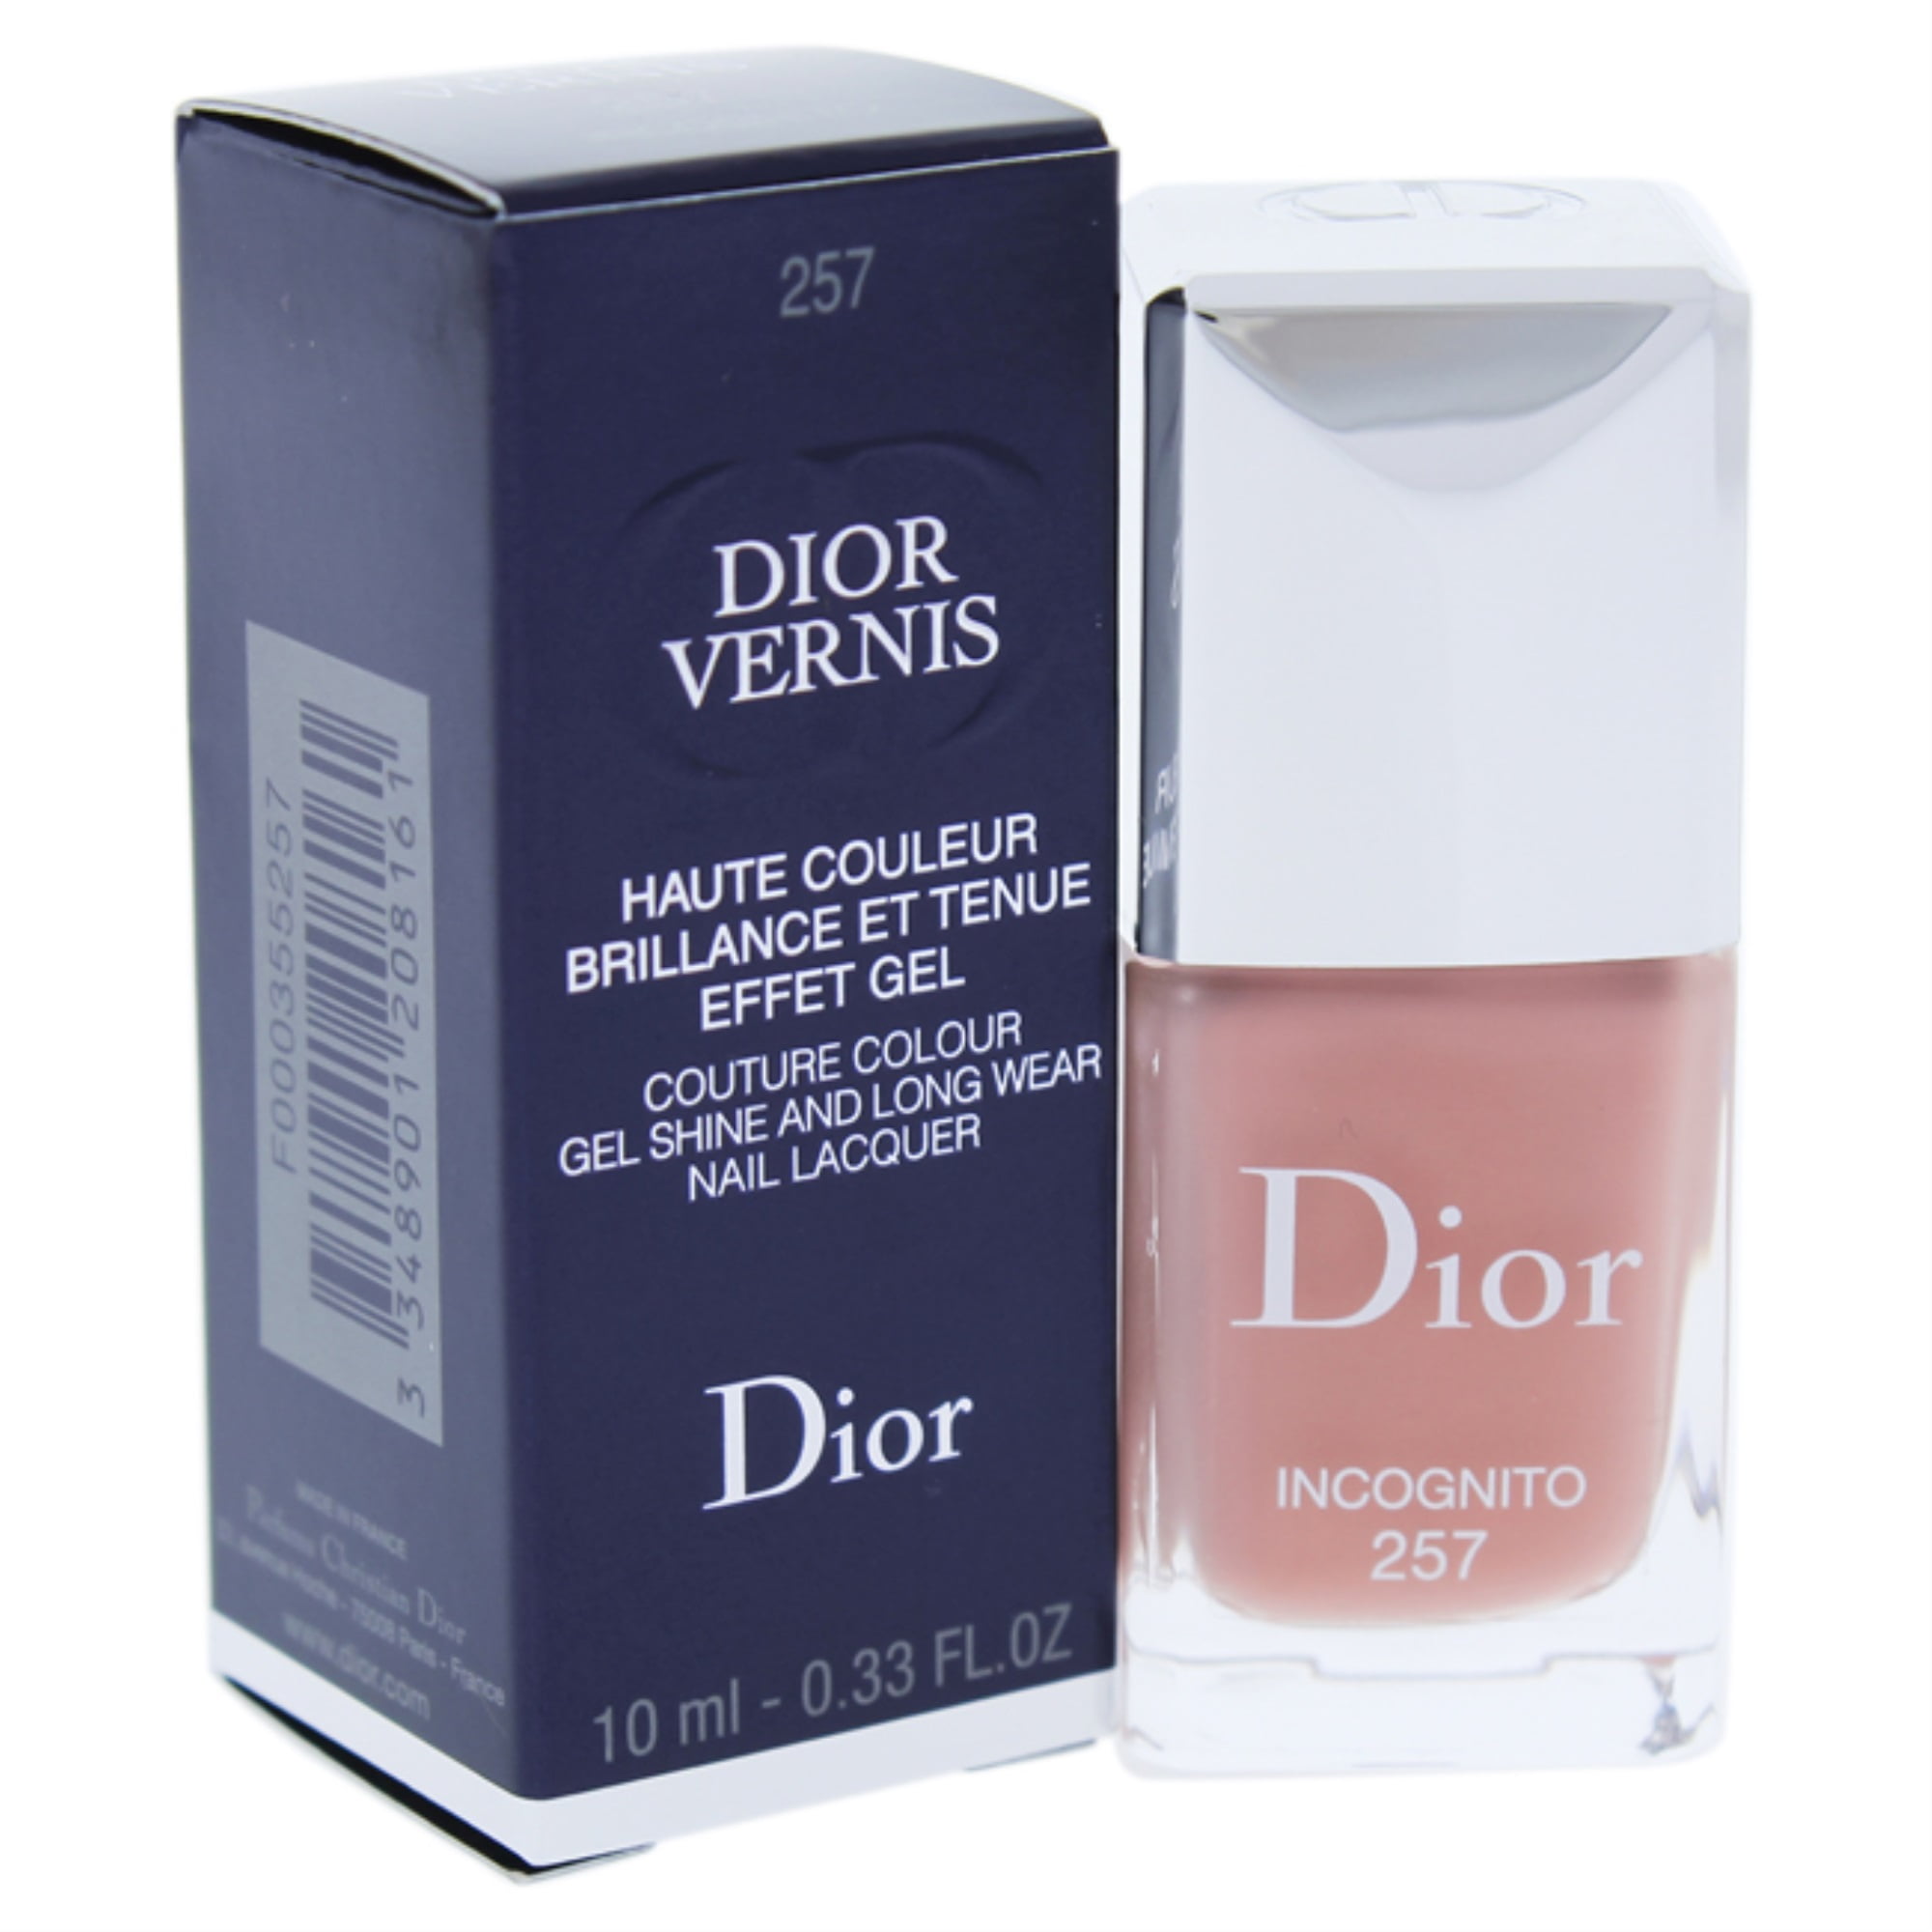 Vernis Dior n°257 | Vernis à ongles, Vernis dior, Ongles